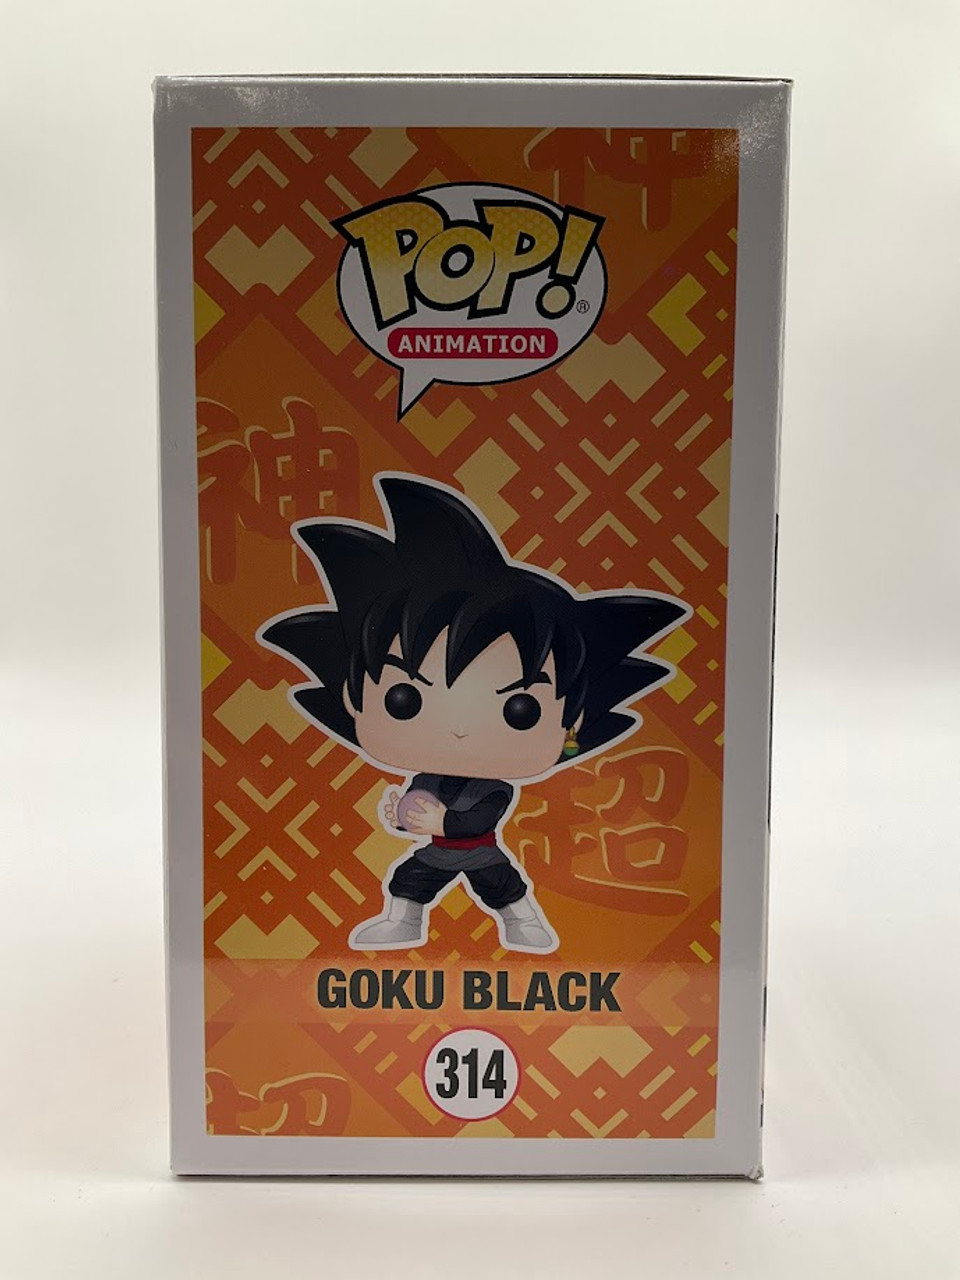 Goku Black Funko Pop! Dragon Ball Super #314